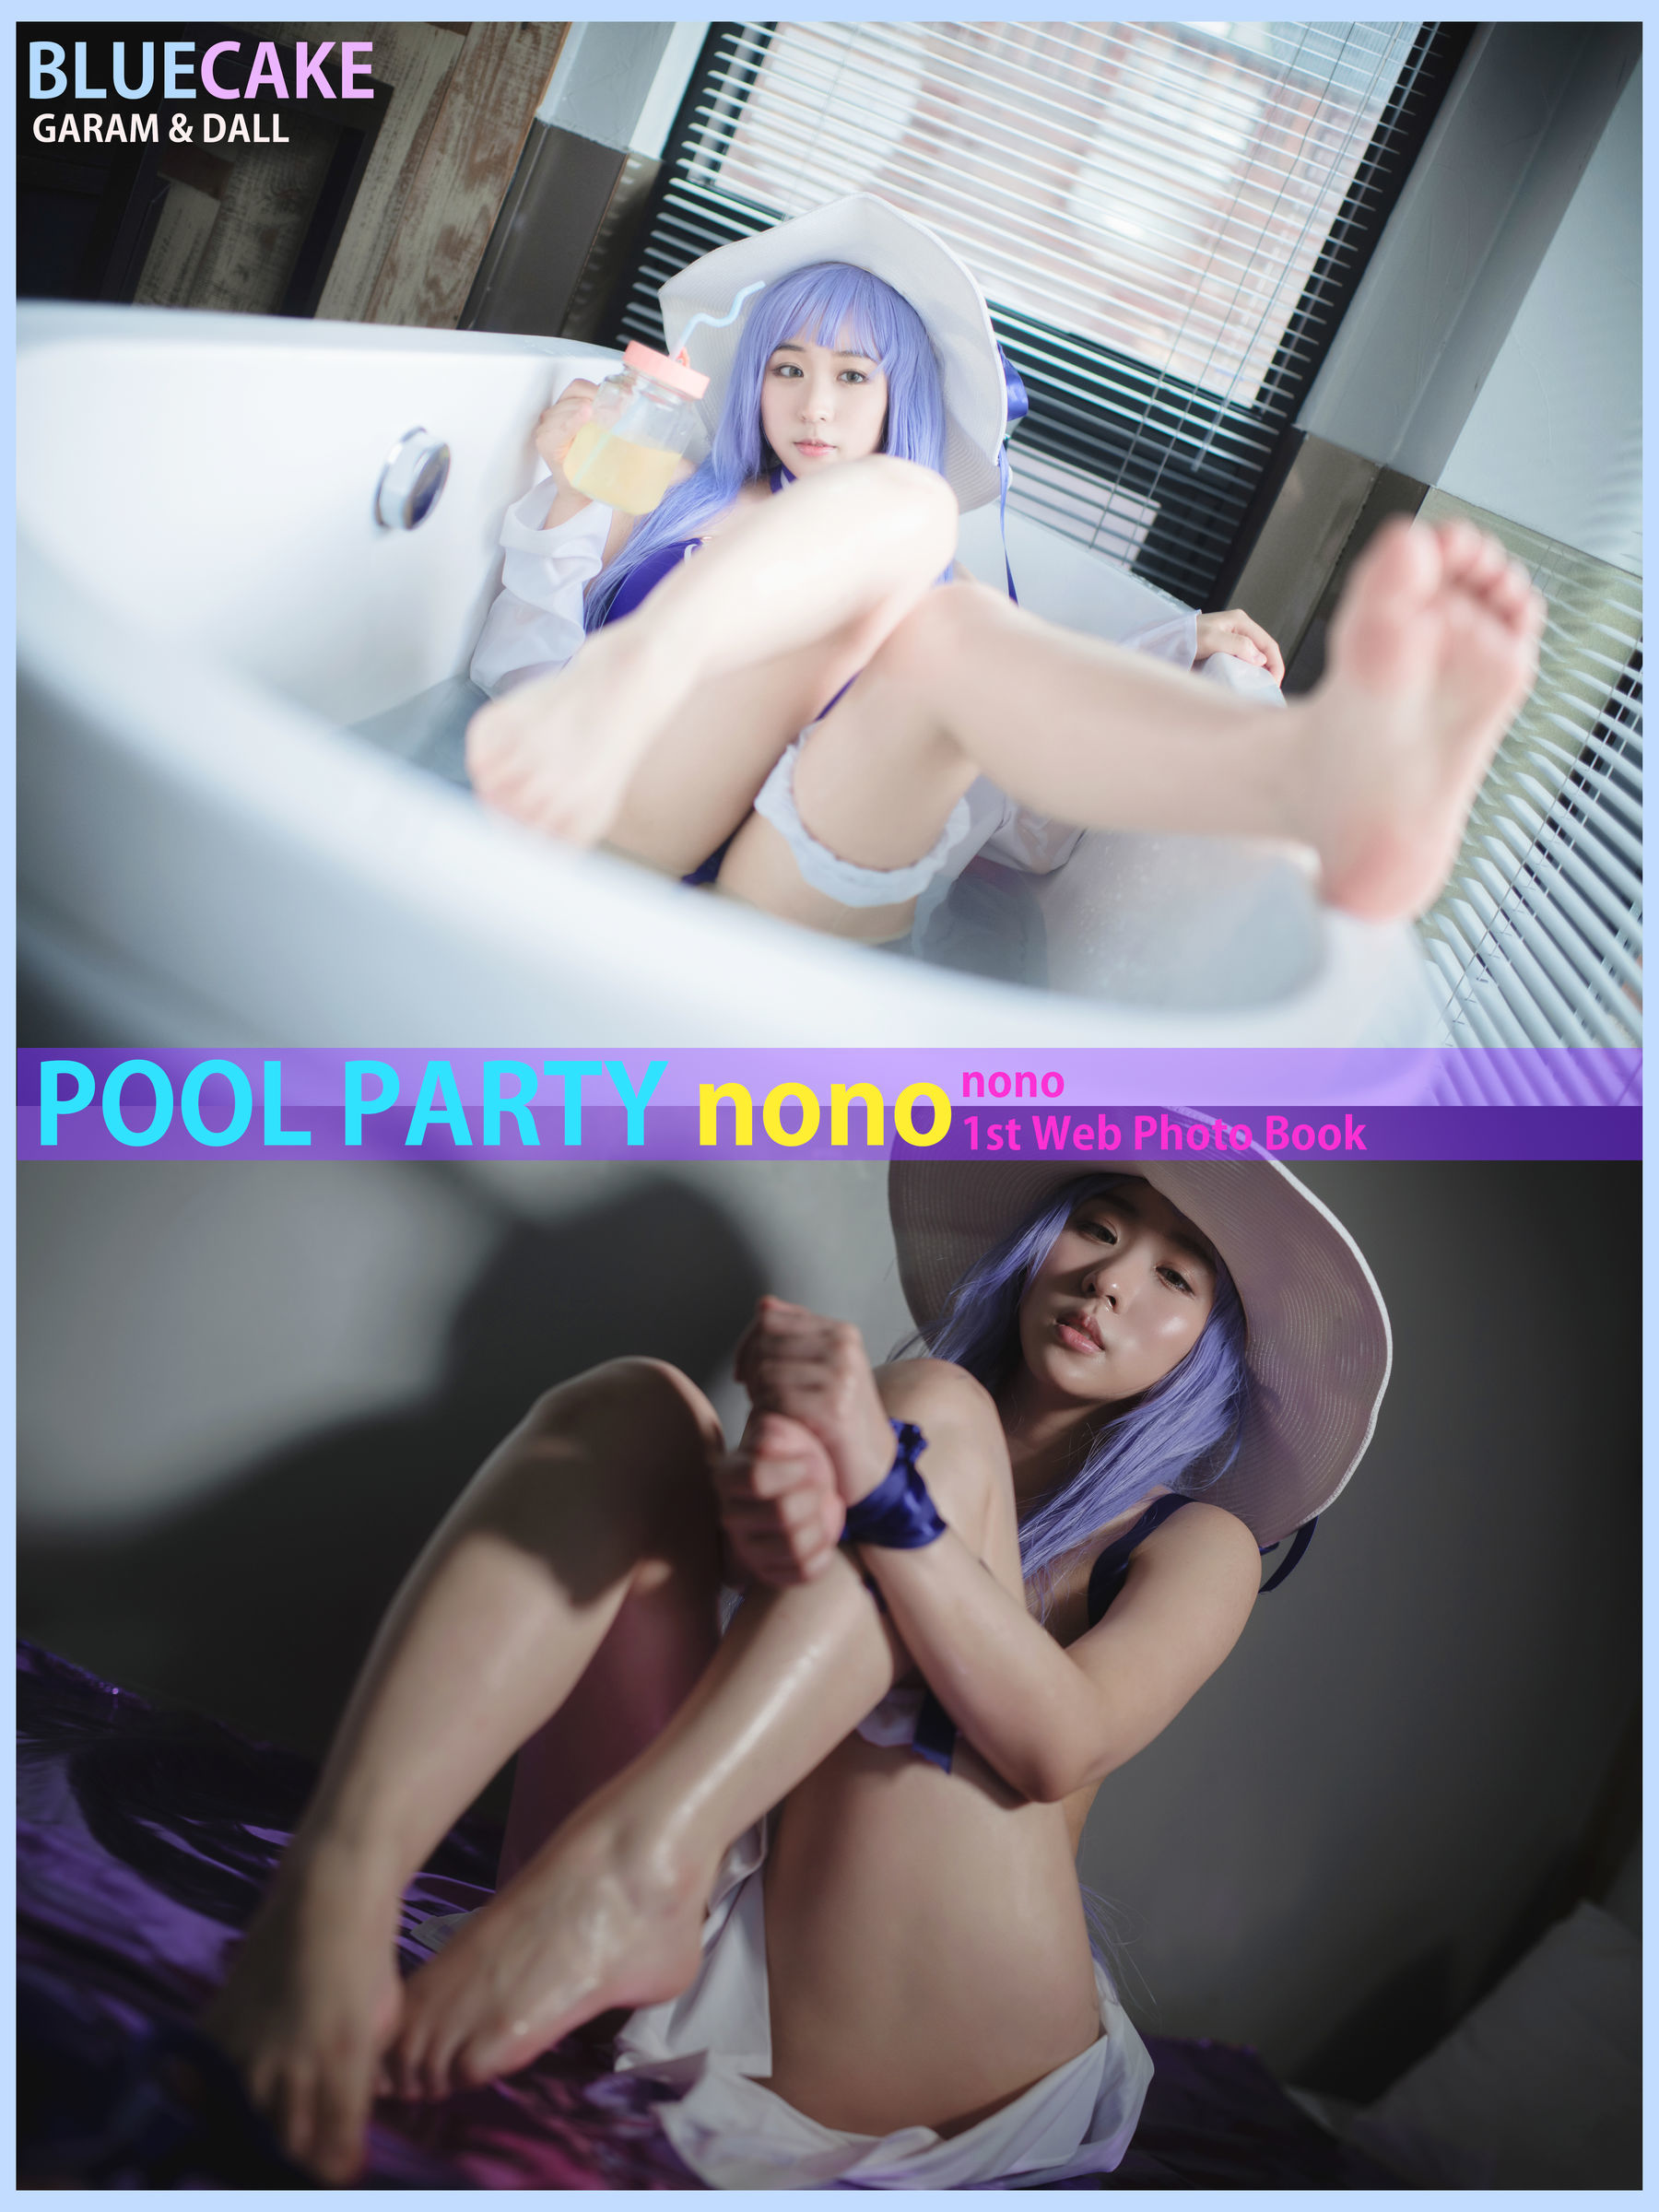 [BLUECAKE] Nono - Pool Party Caitlyn  第1张